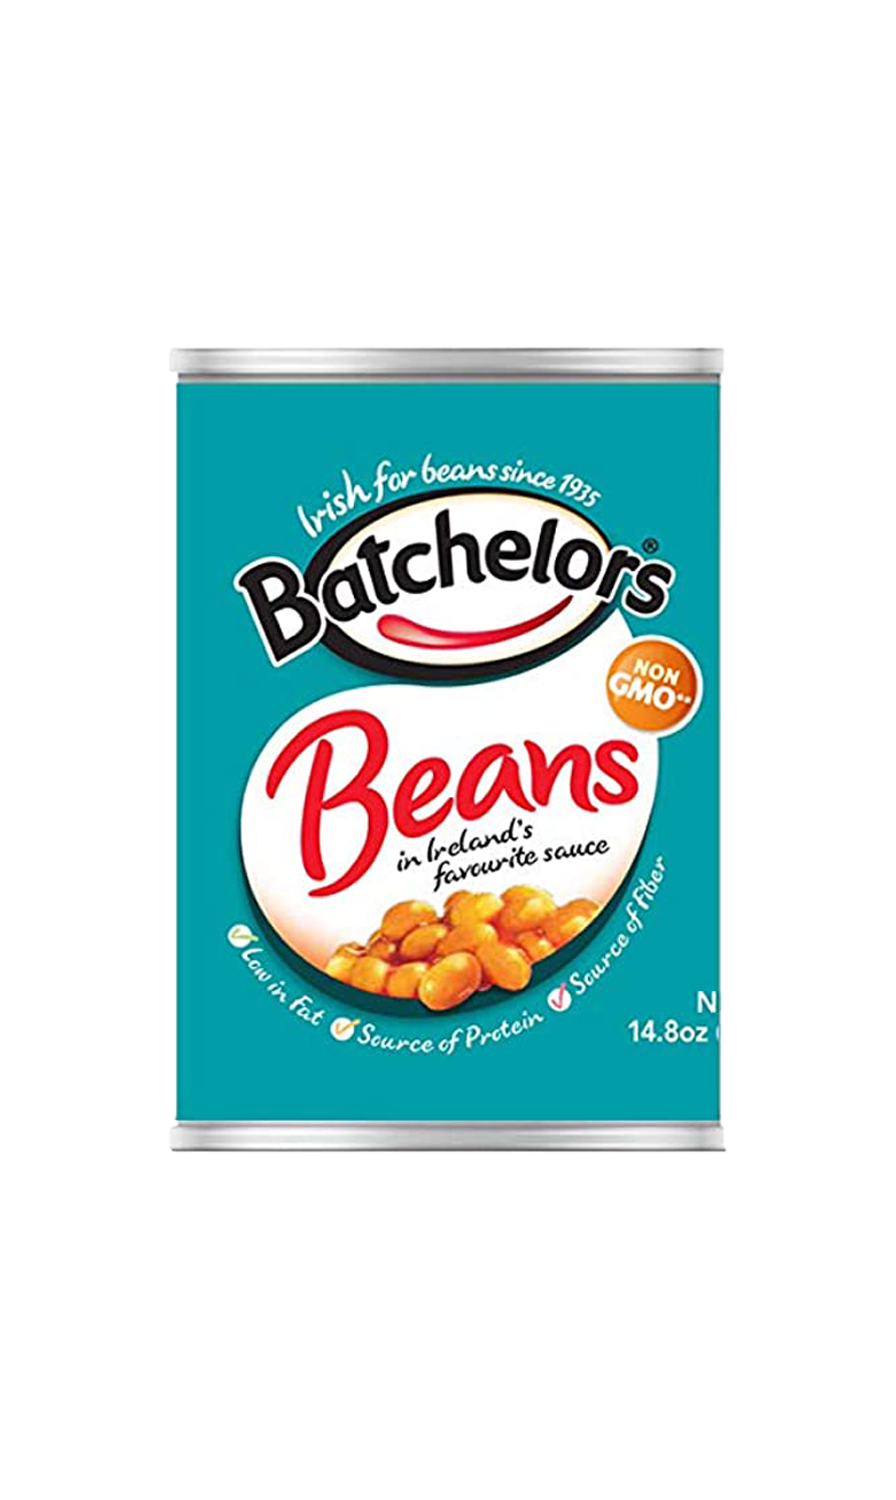 Batchelors Baked Beans 420g